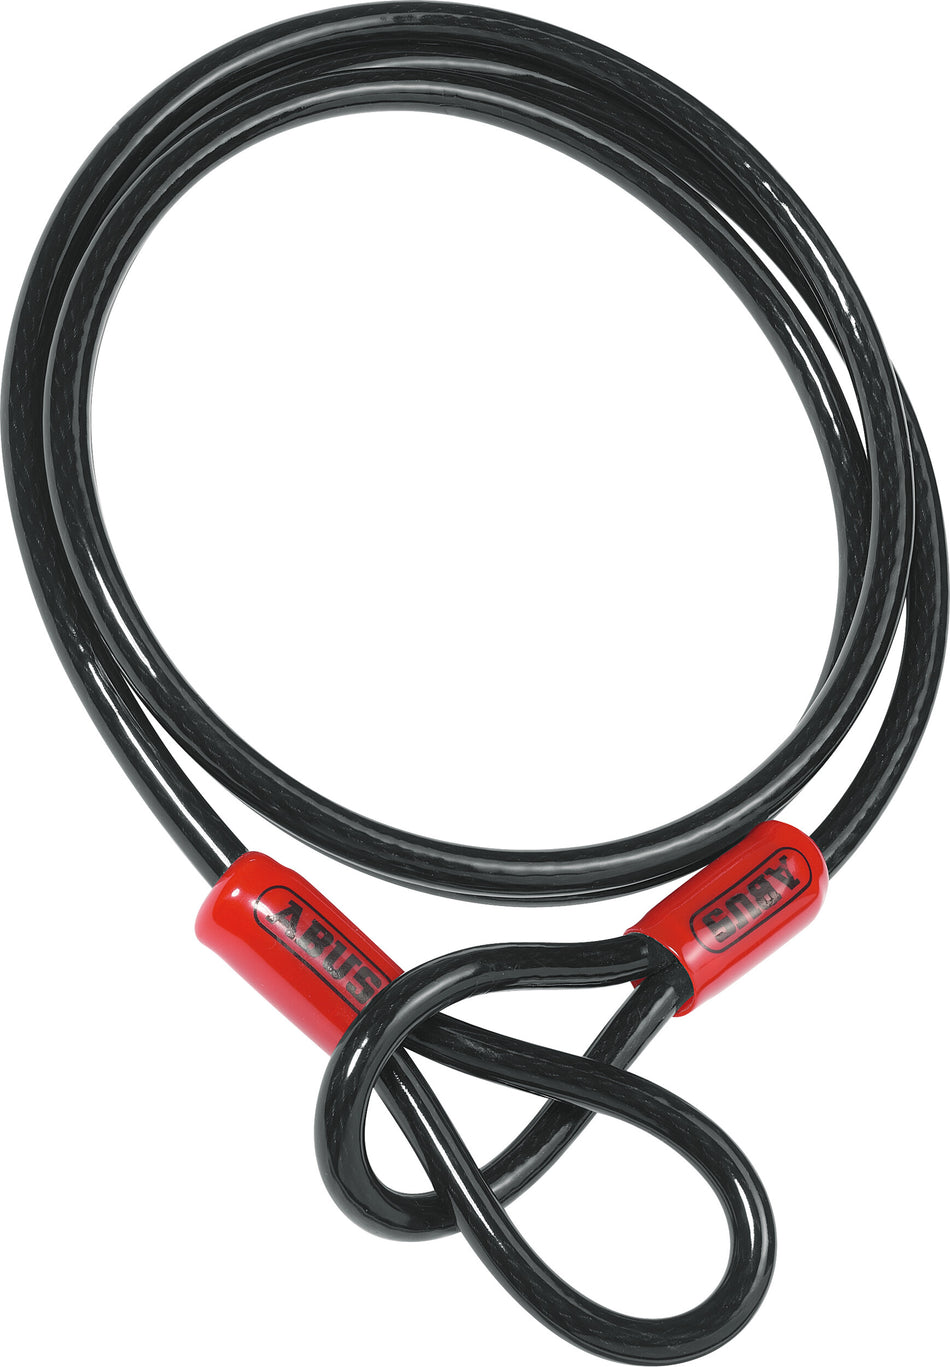 Abus Cobra Loop Cable 7ft 37108